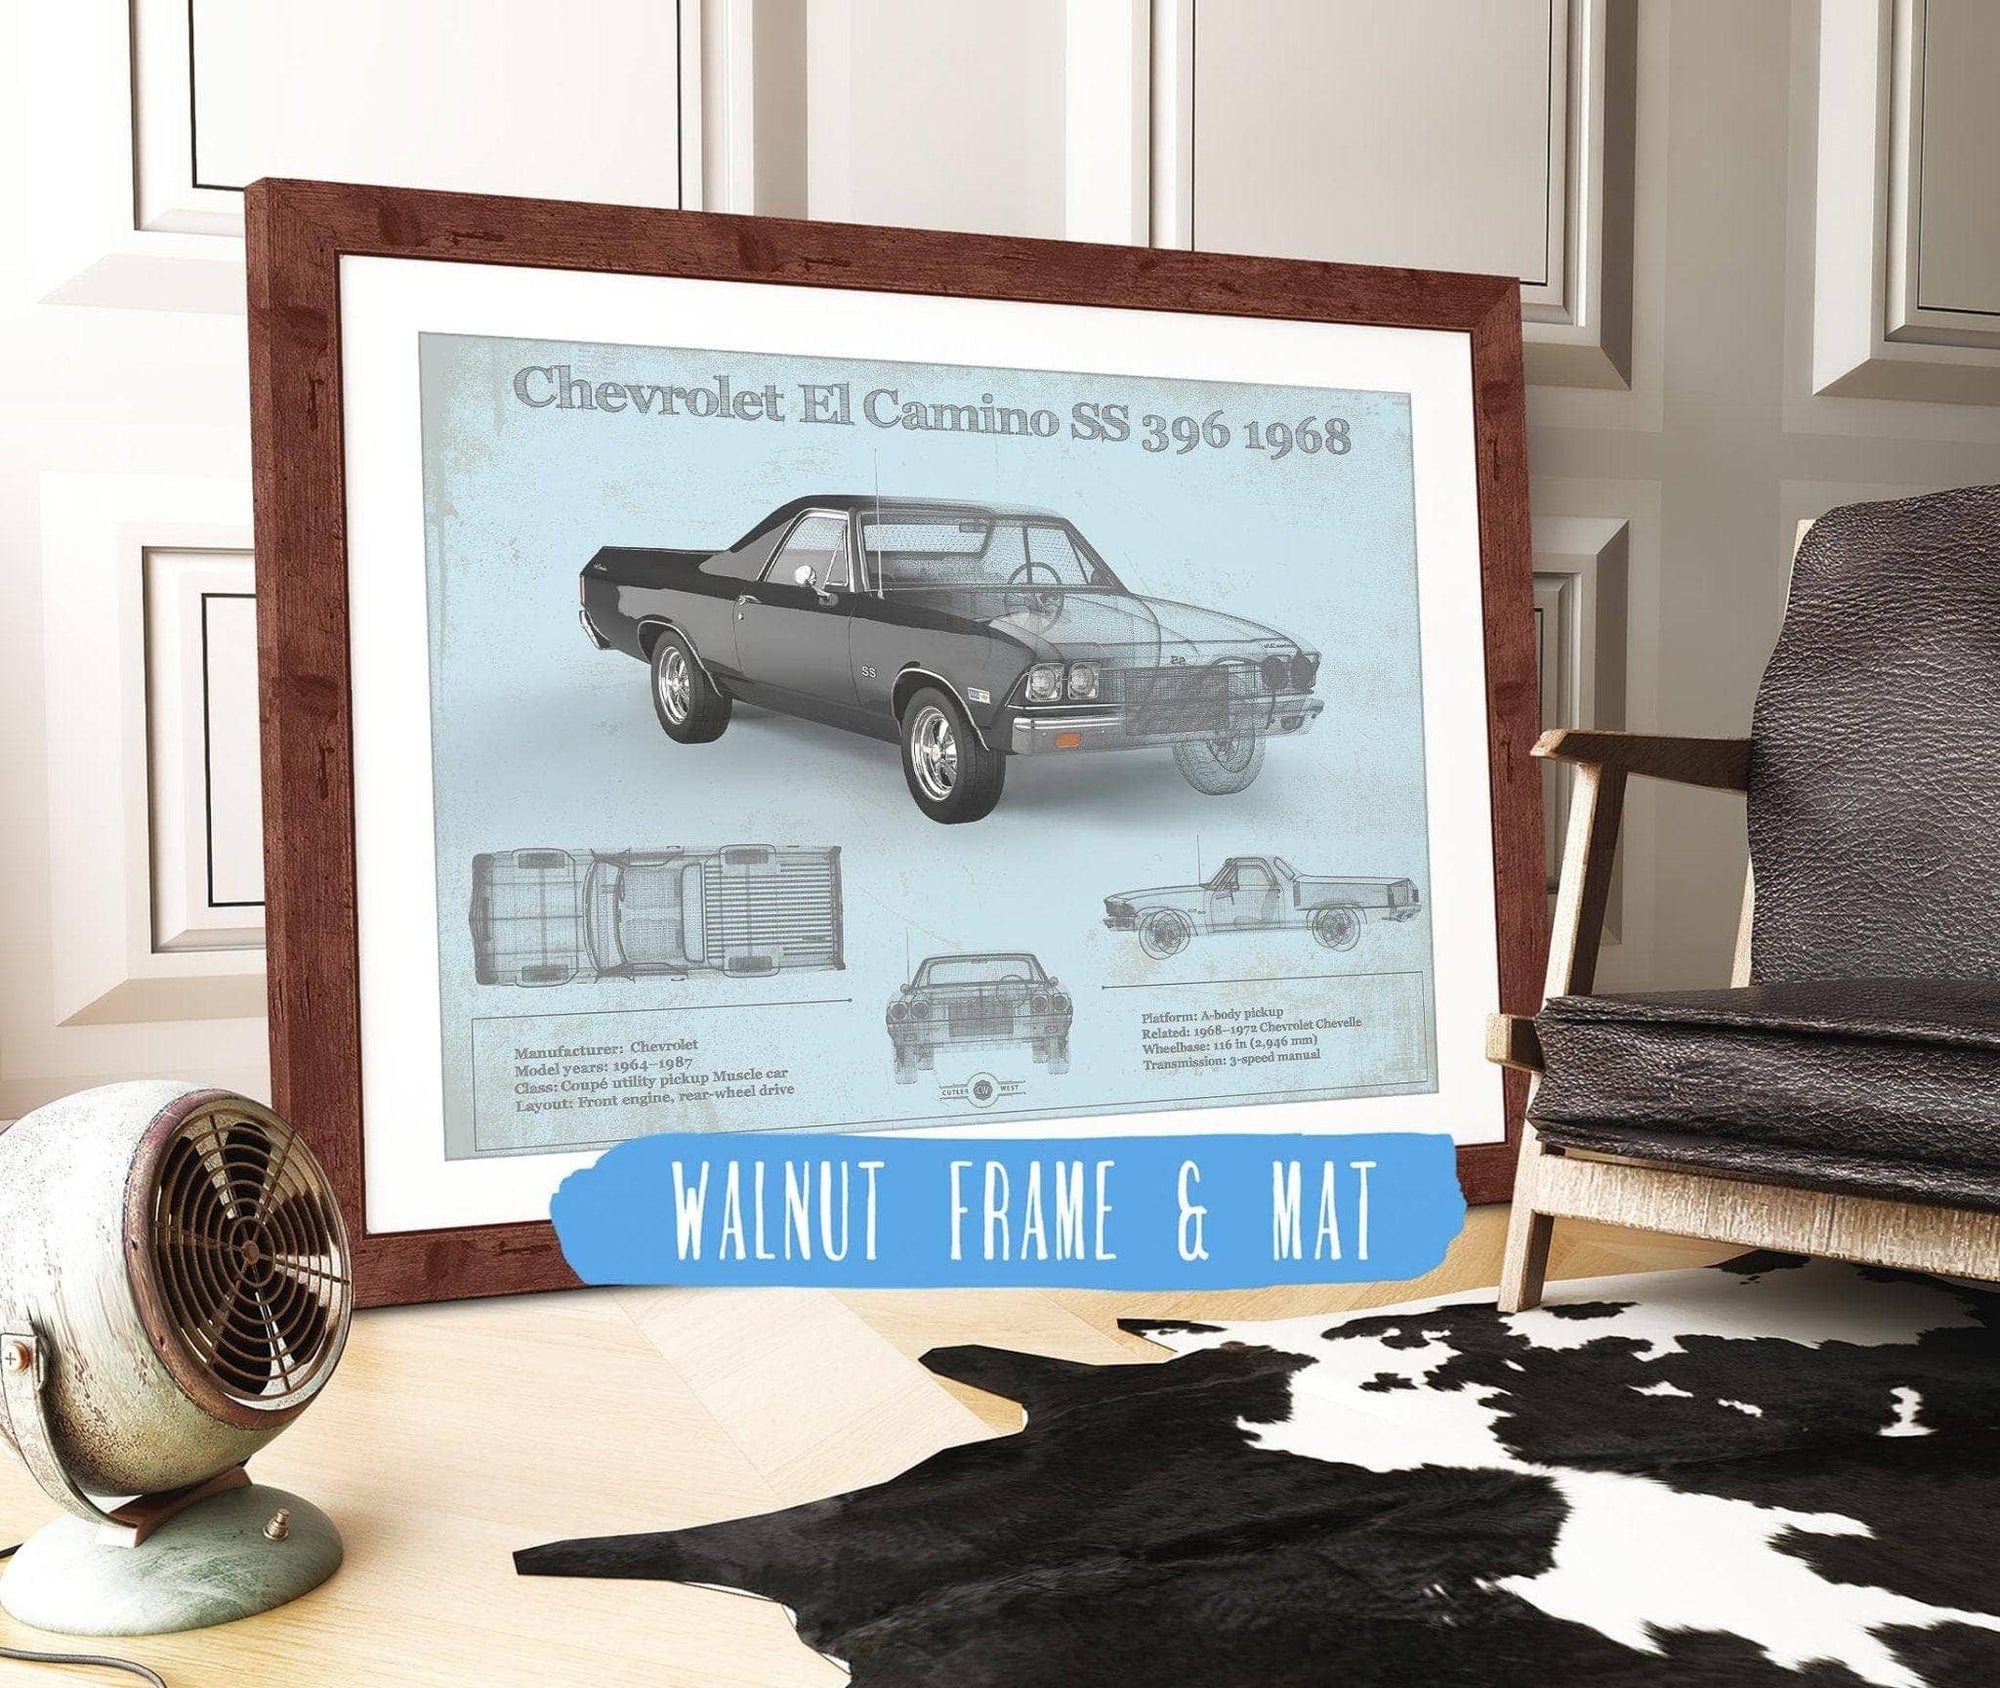 Cutler West Chevrolet Collection Chevrolet El Camino SS 396 1968 Vintage Blueprint Auto Print